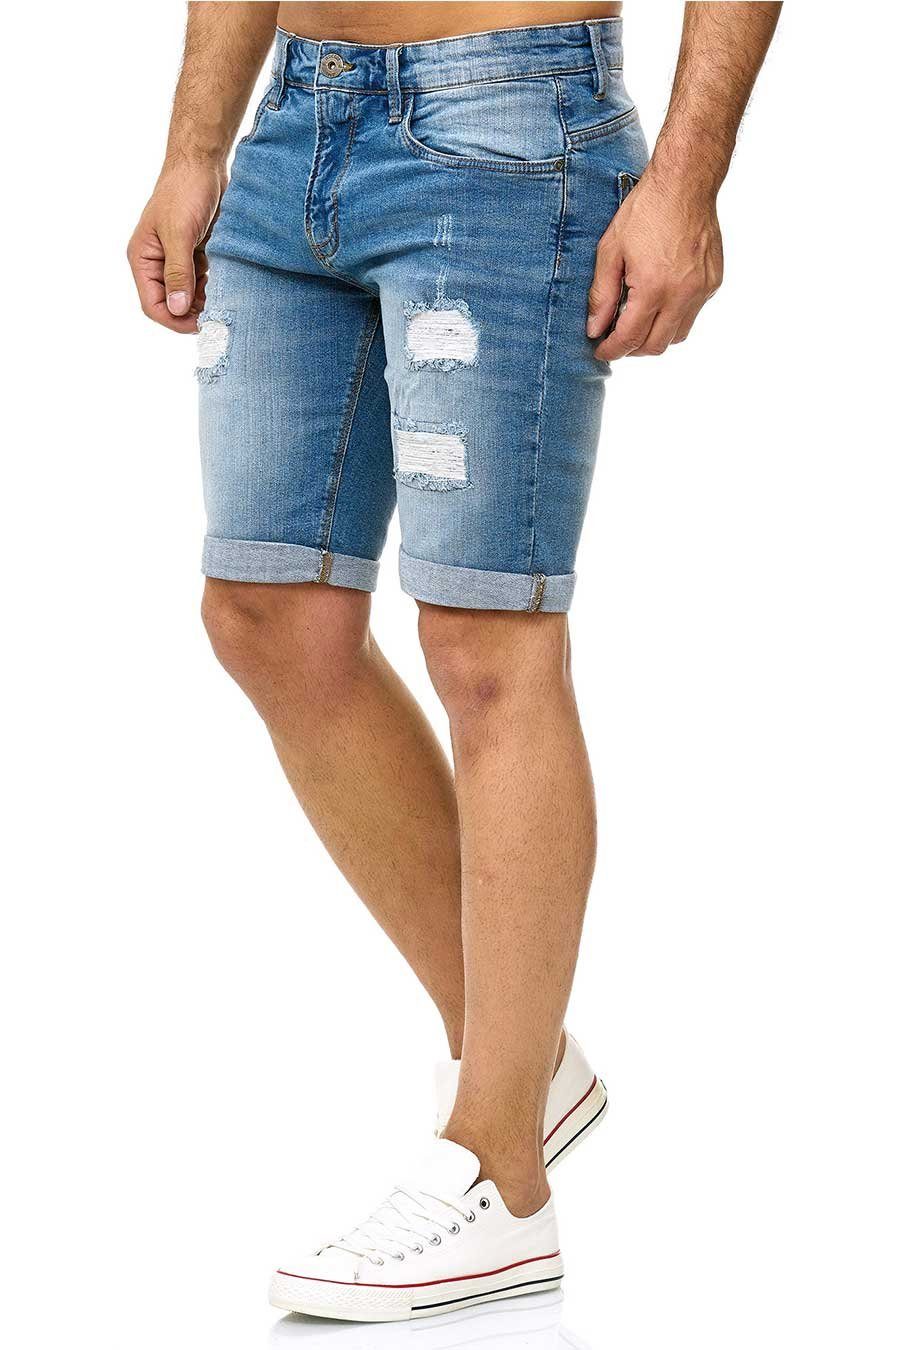 Indicode Blue & Wash mit Destroyed Shorts Used-Look KADEN HOLES Effekt